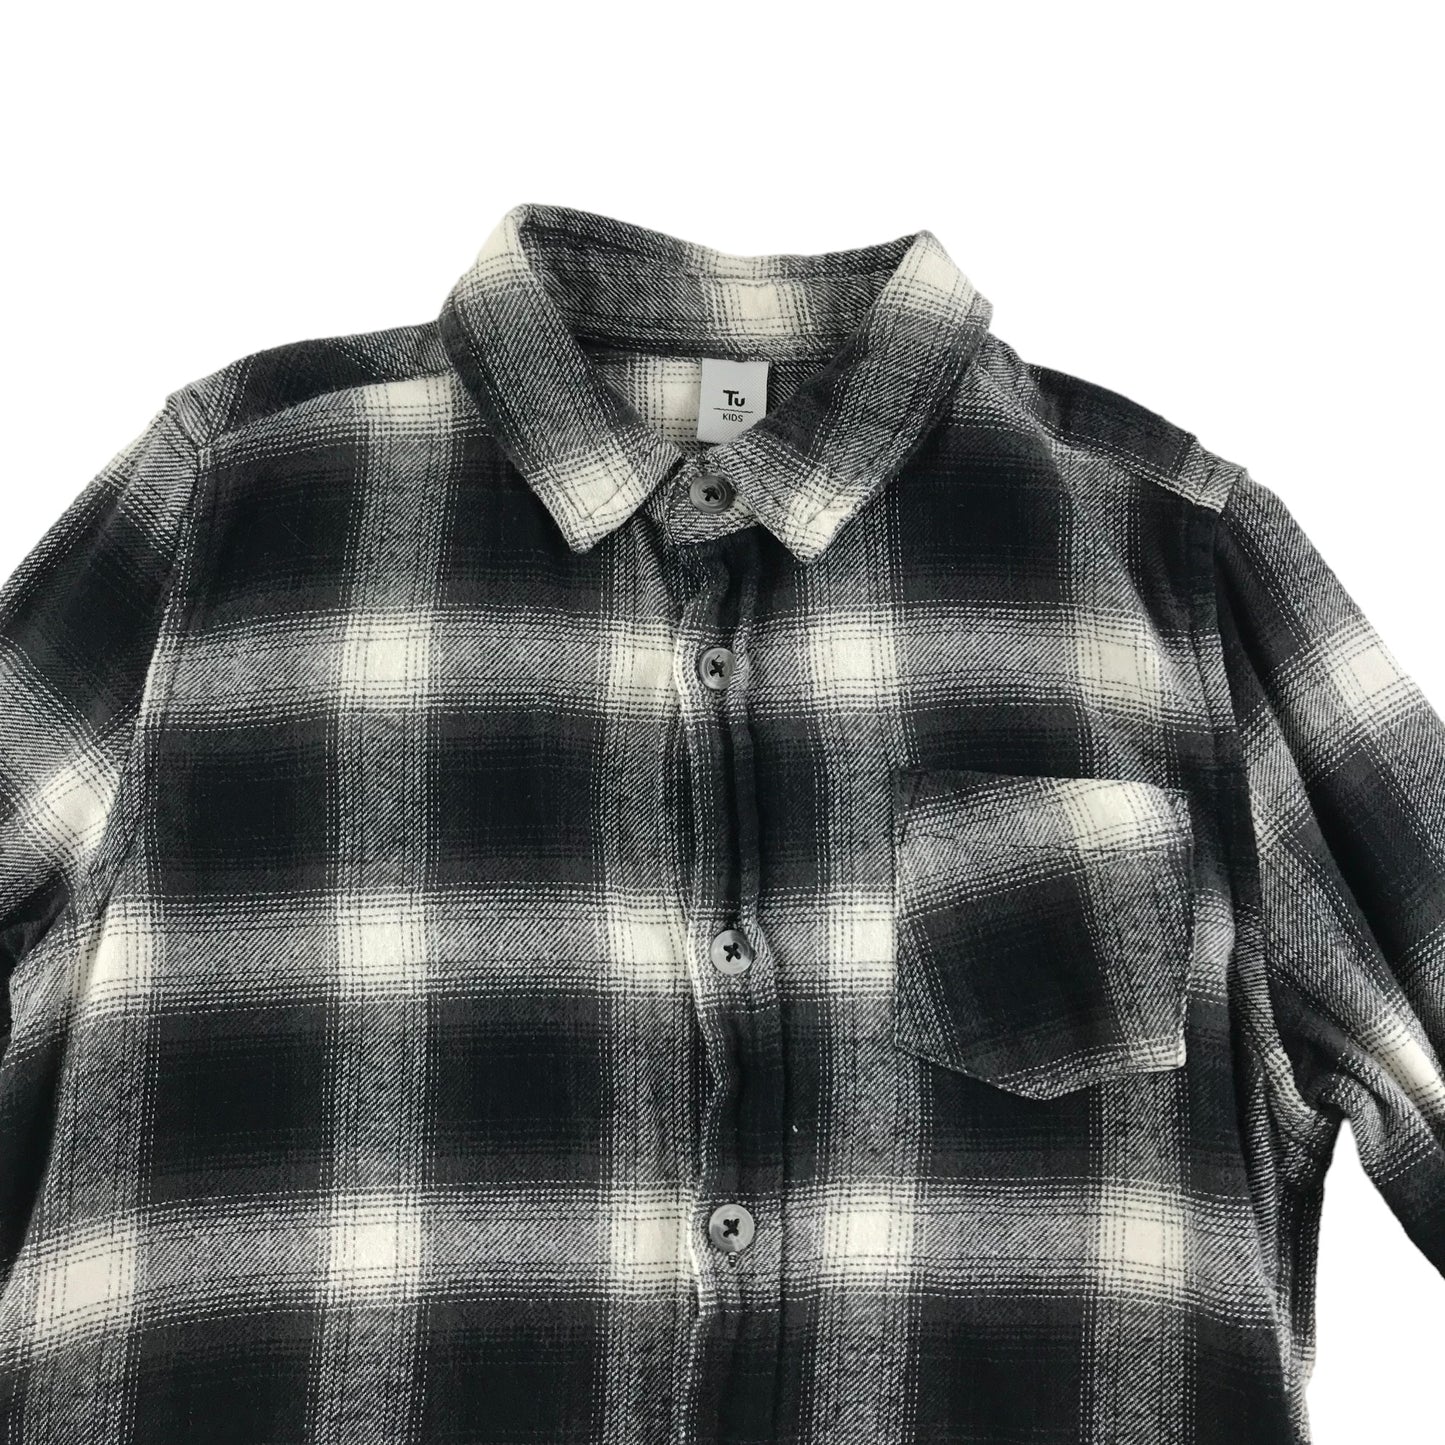 Tu Shirt Age 7 Grey check pattern button up cotton